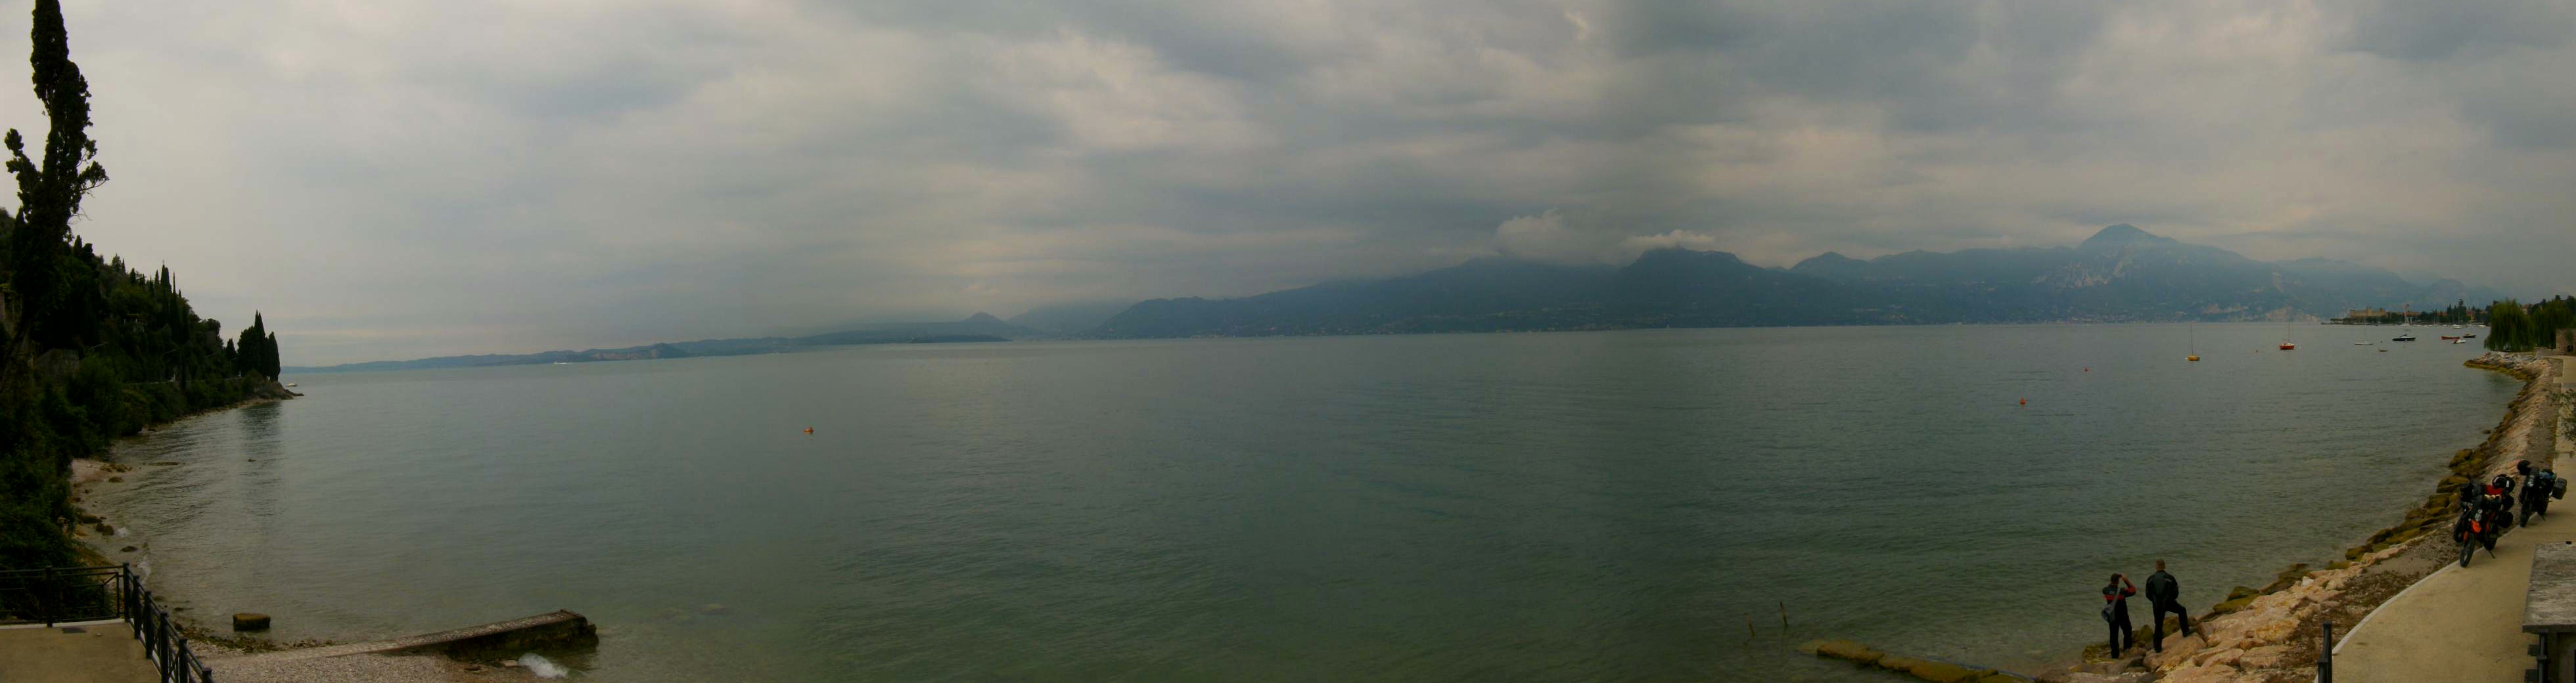 Panoráma a Garda tó mellett